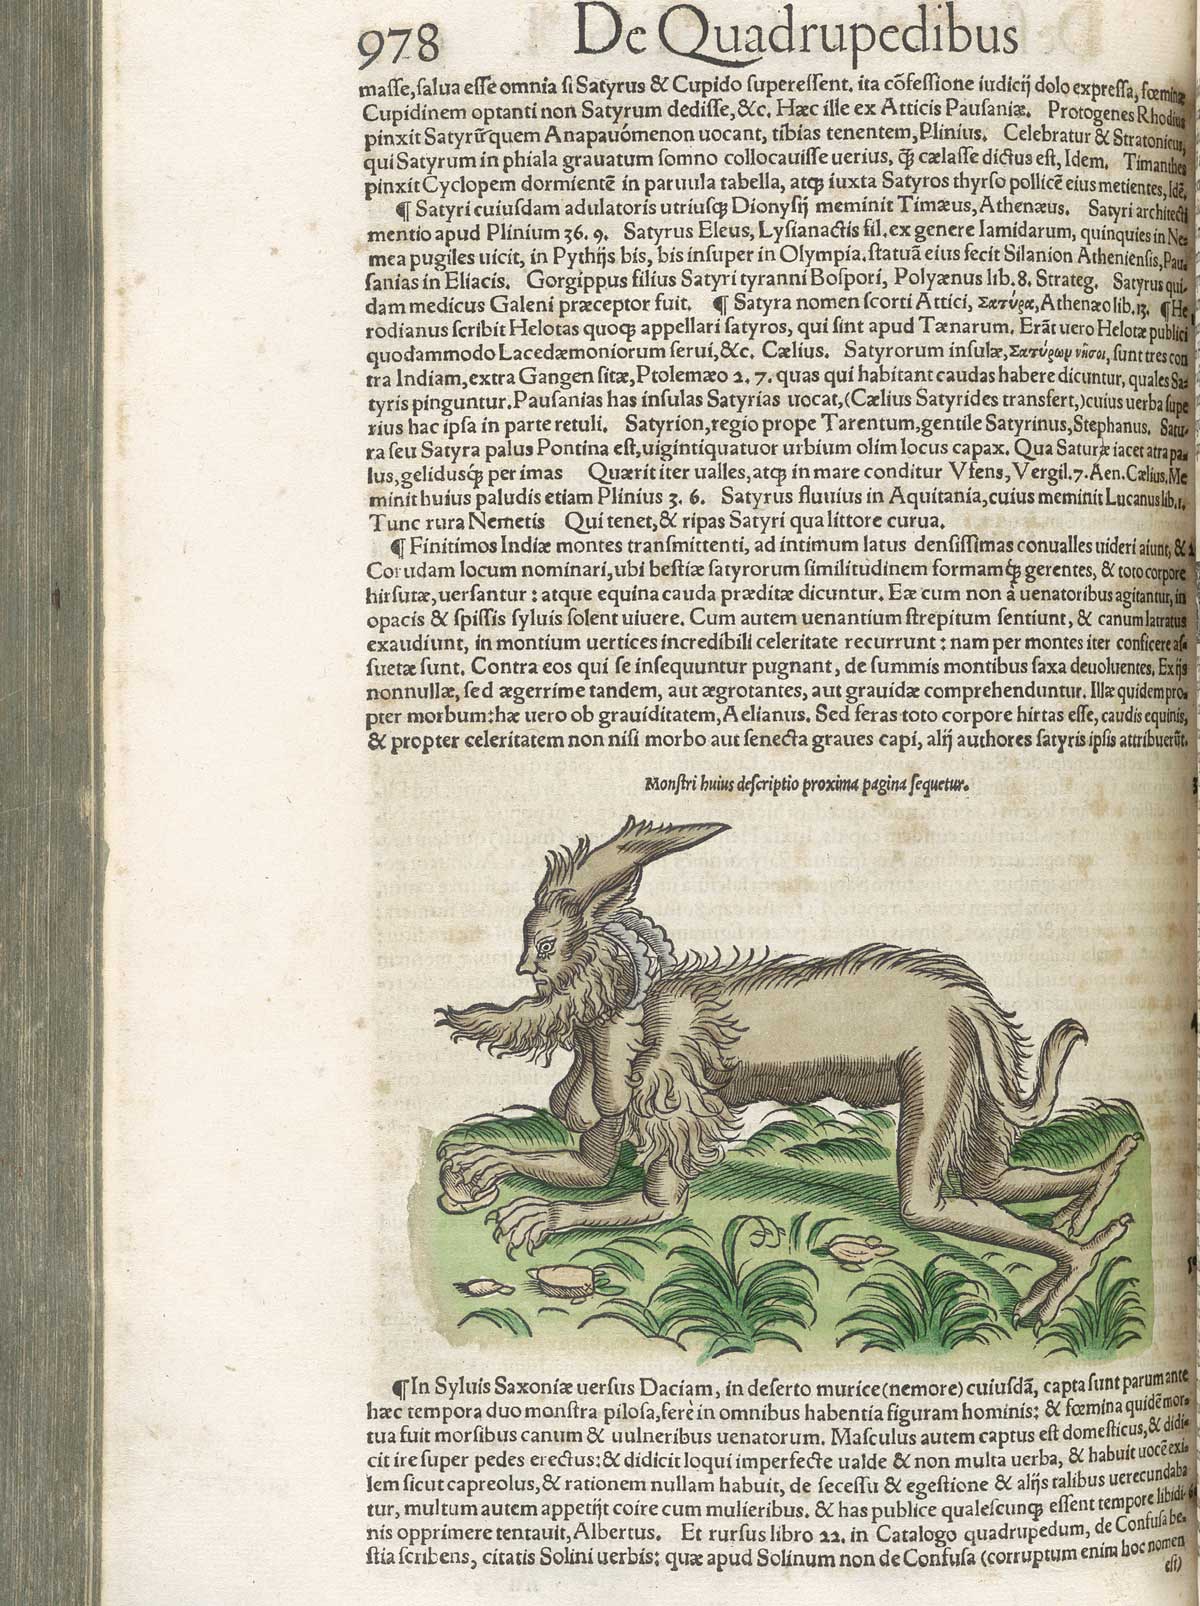 Page 978 from volume 1 of Conrad Gessner's Conradi Gesneri medici Tigurini Historiae animalium, featuring the colored woodcut of a satyr.